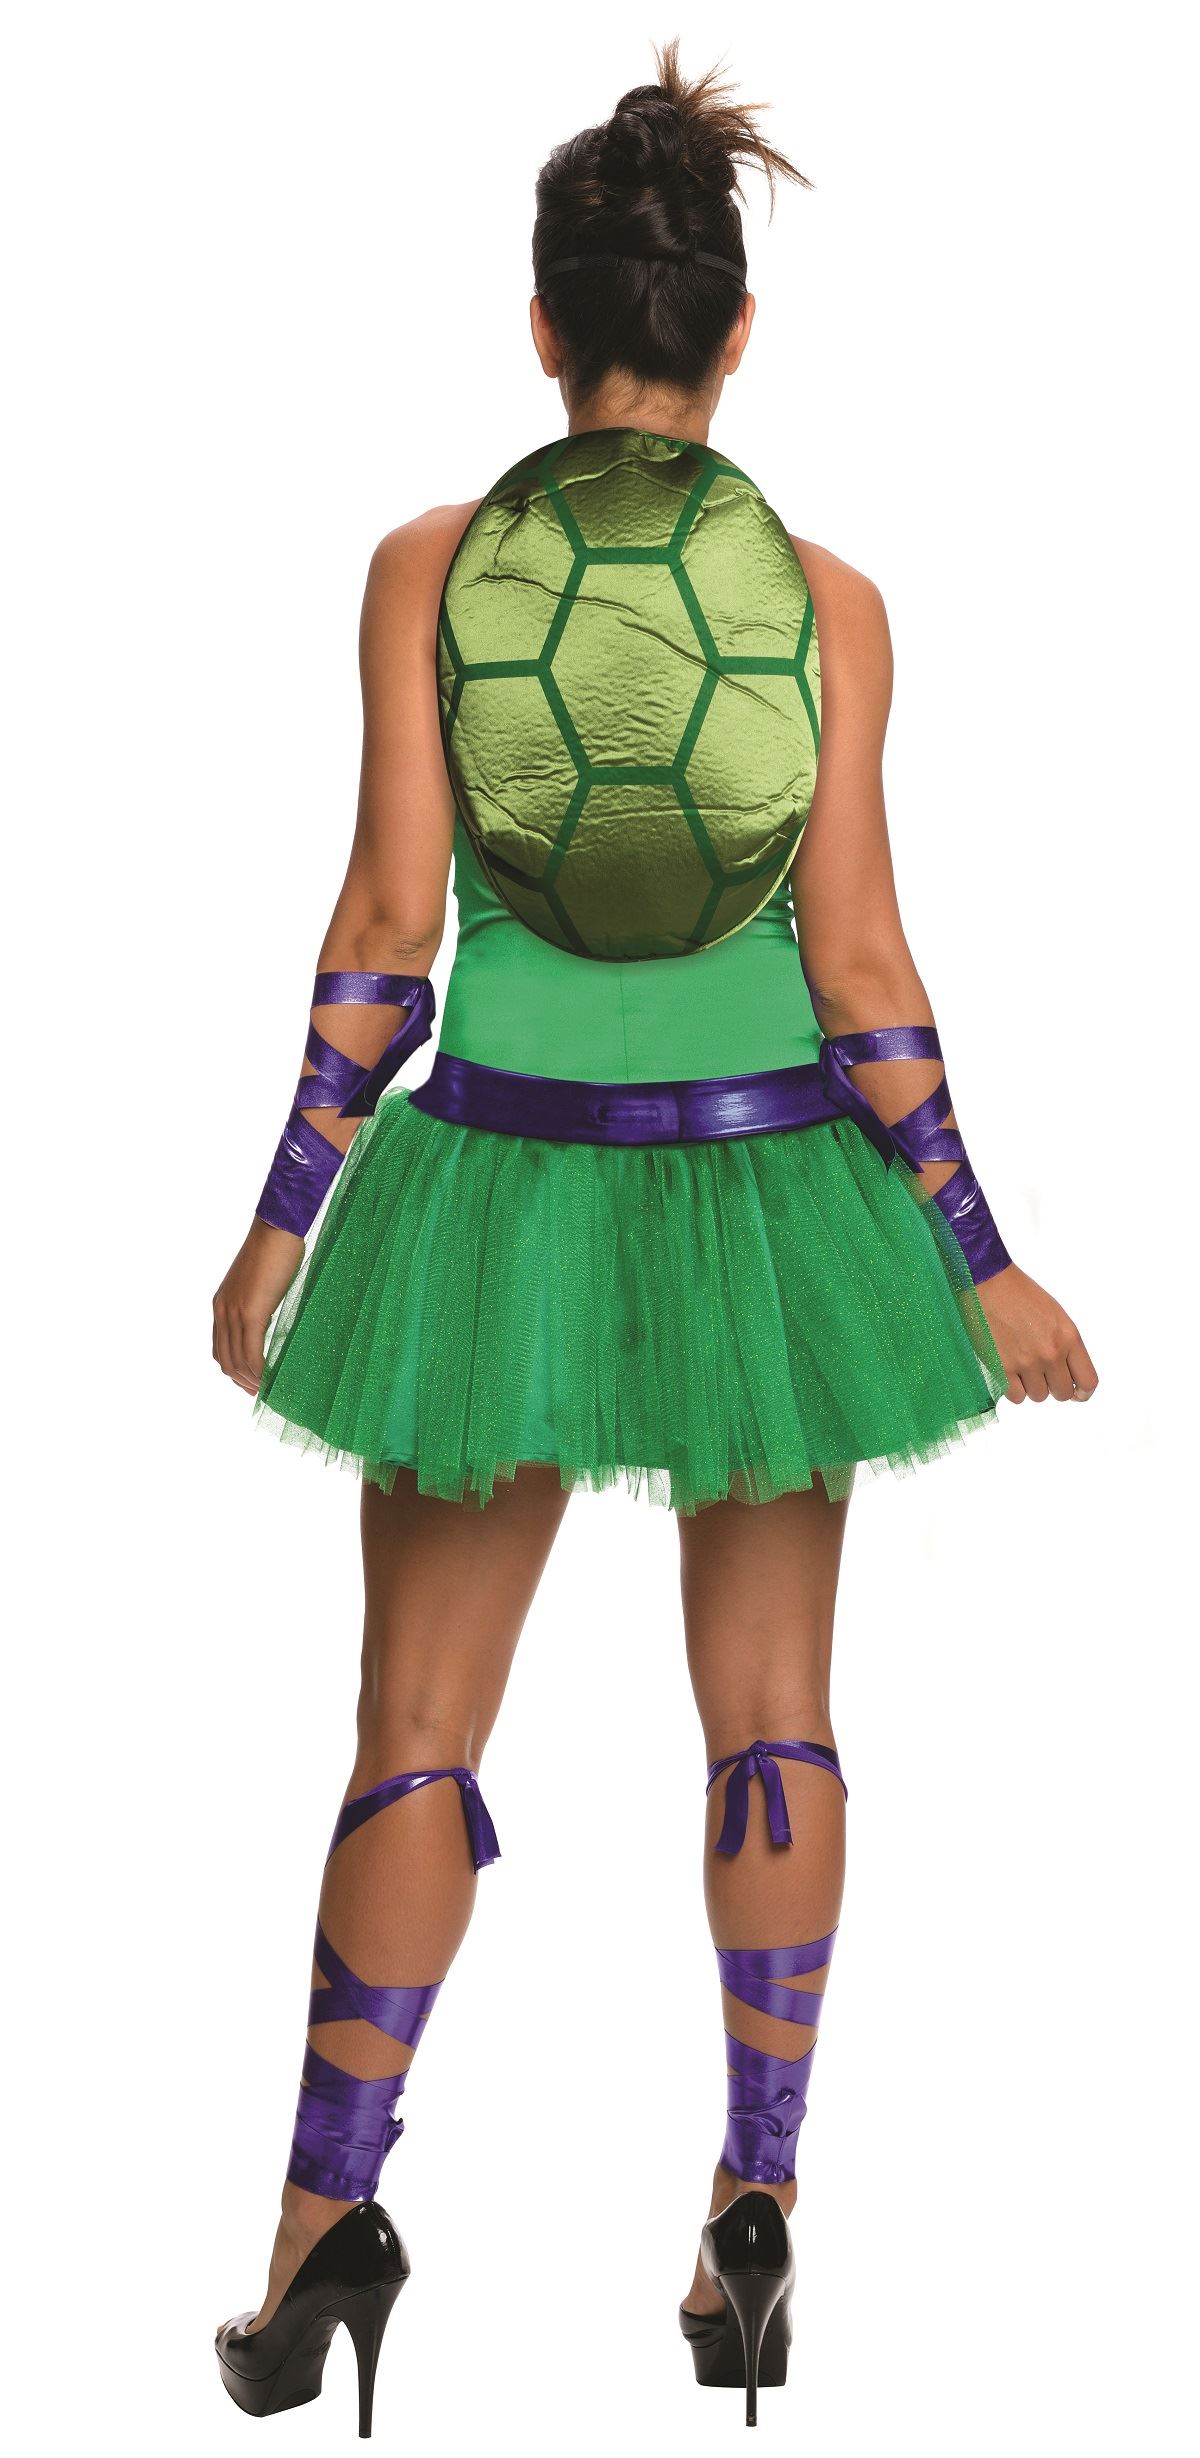 Adult Donatello Ninja Turtle Women Costume, $34.99